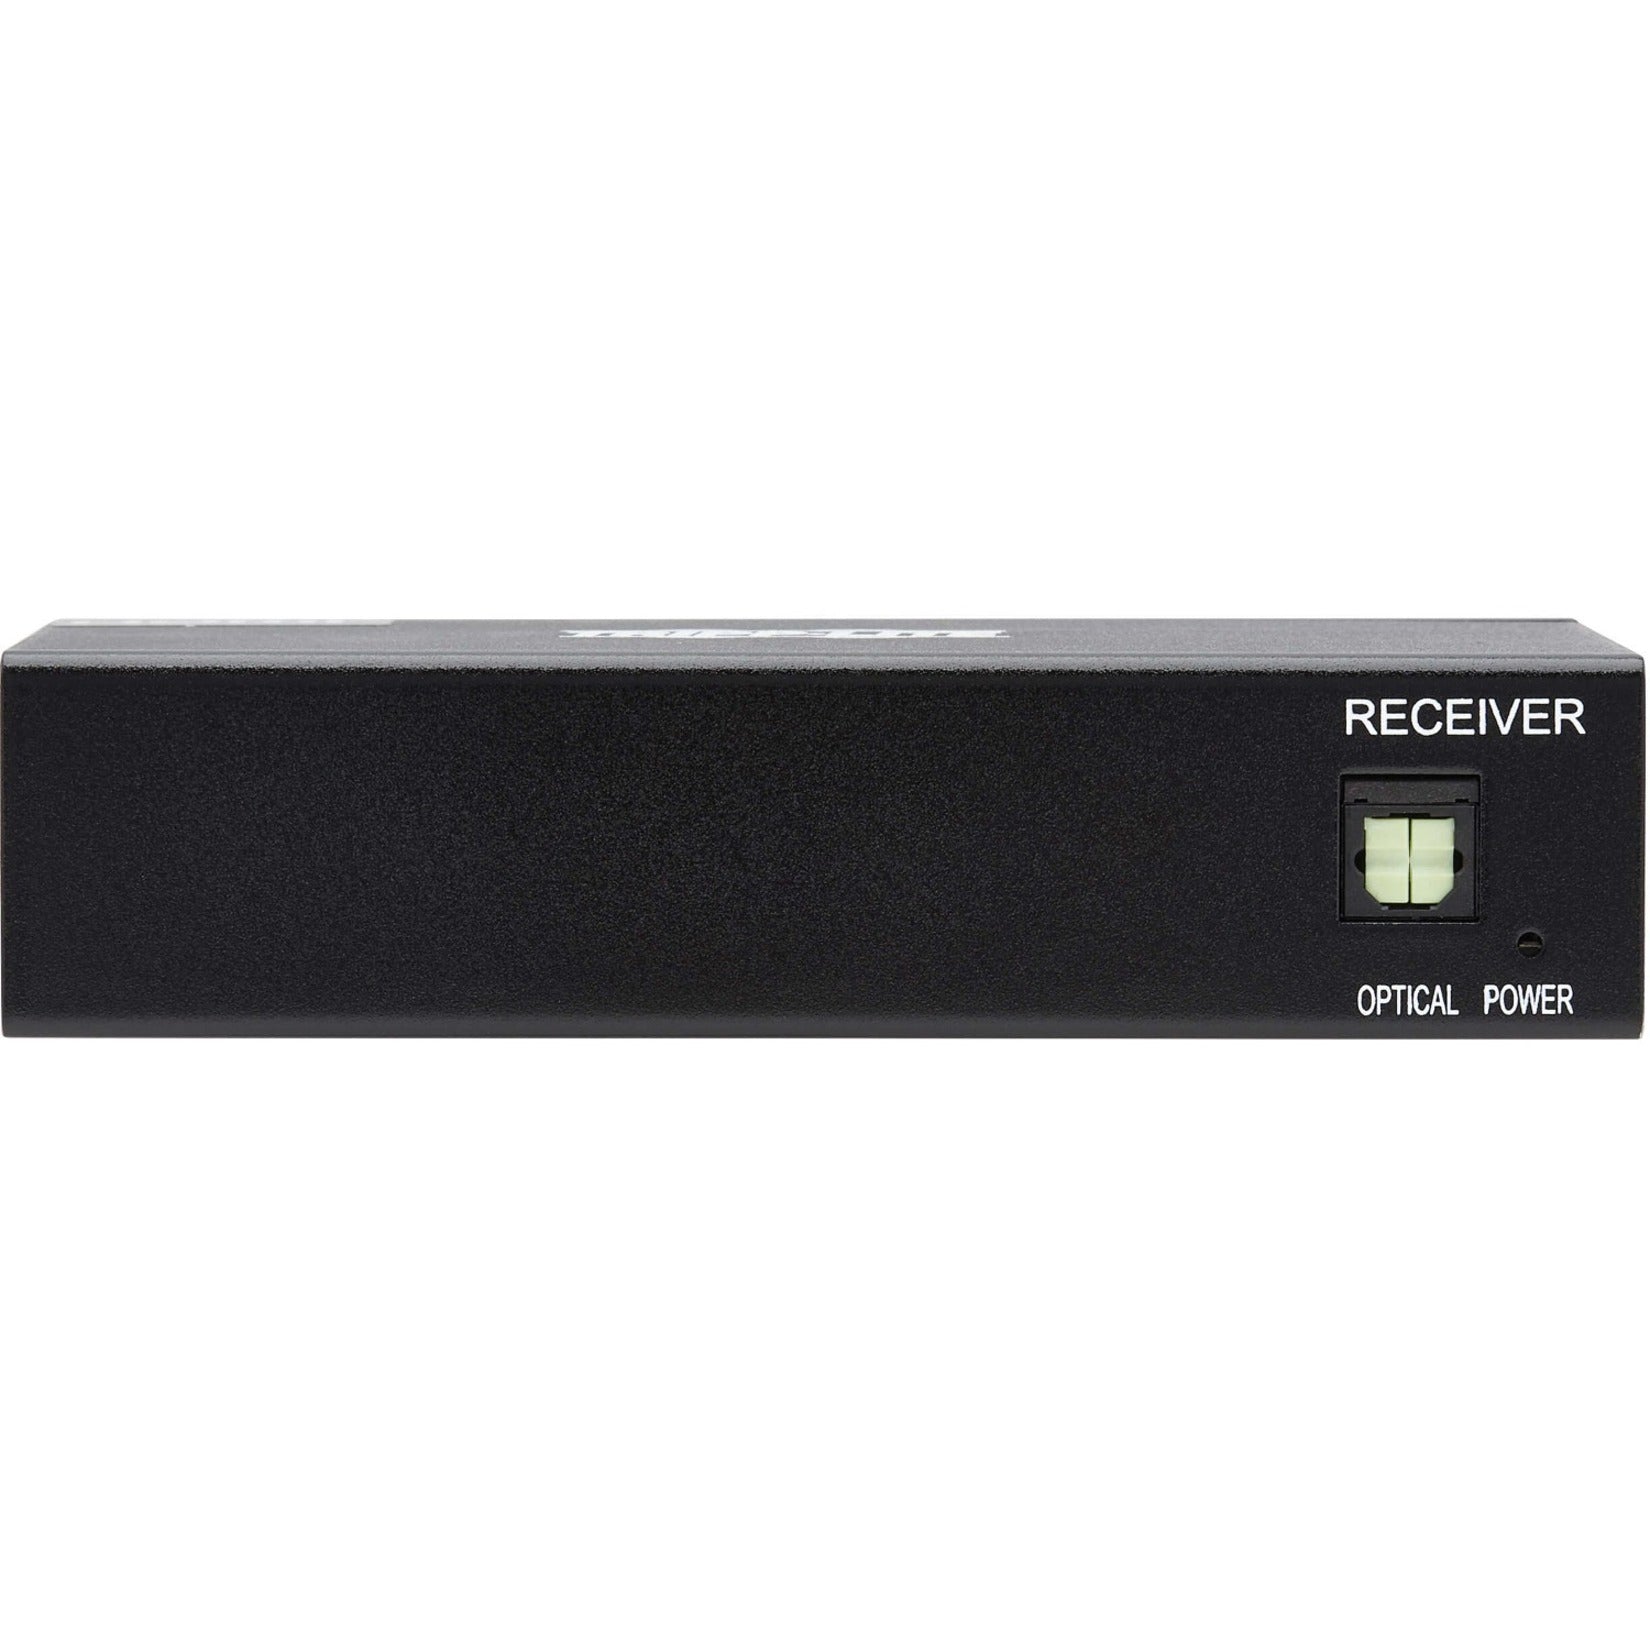 Tripp Lite B127A-1A0-BH 1-Port HDMI over Cat6 Receiver, 4K UHD, 3840 x 2160, TAA Compliant, 1 Year Warranty